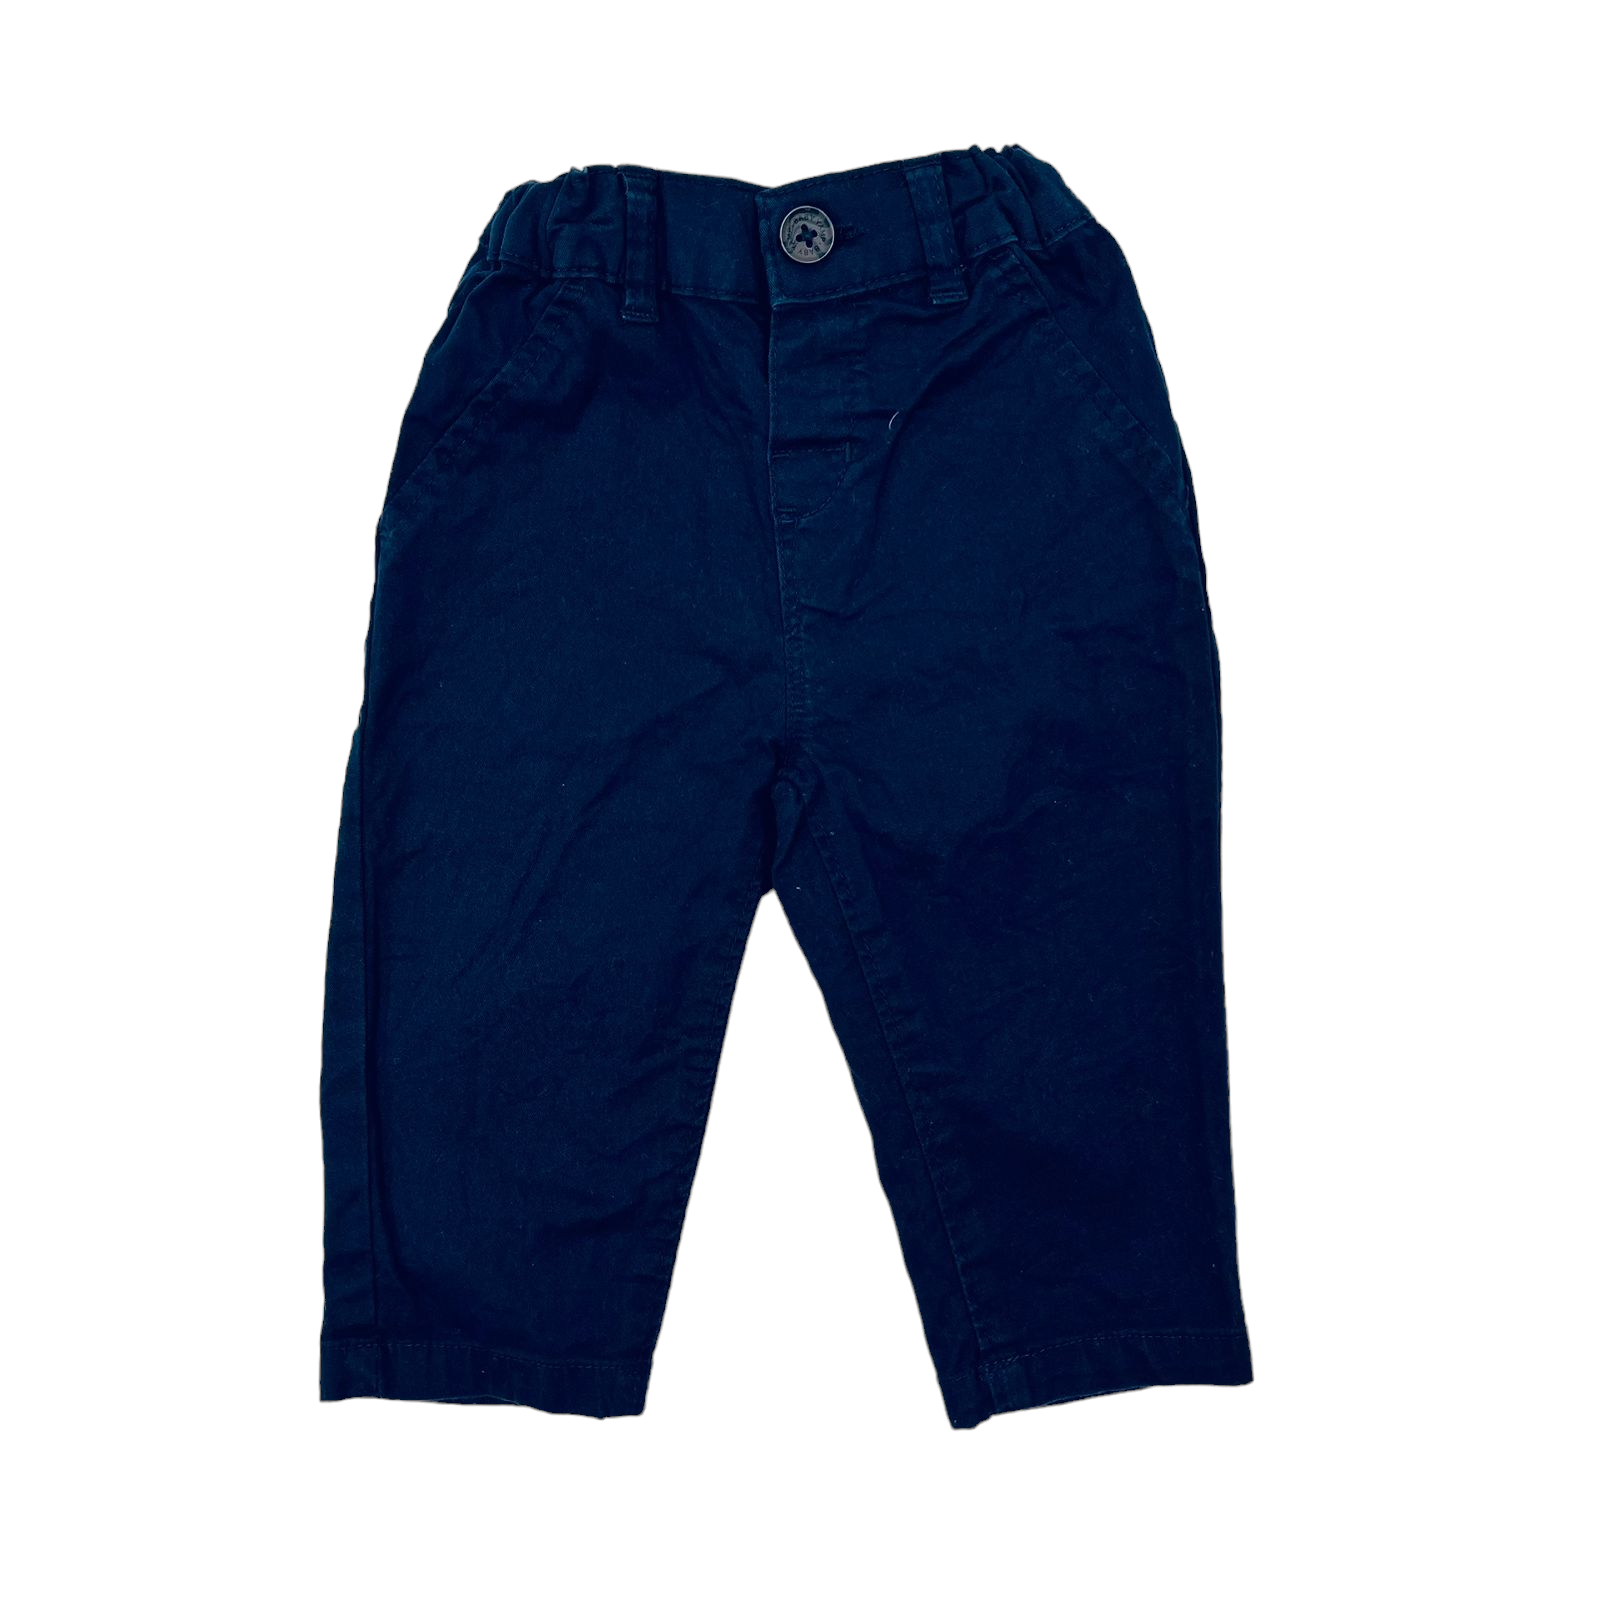 Pantalon azul marino con pretina con elastico